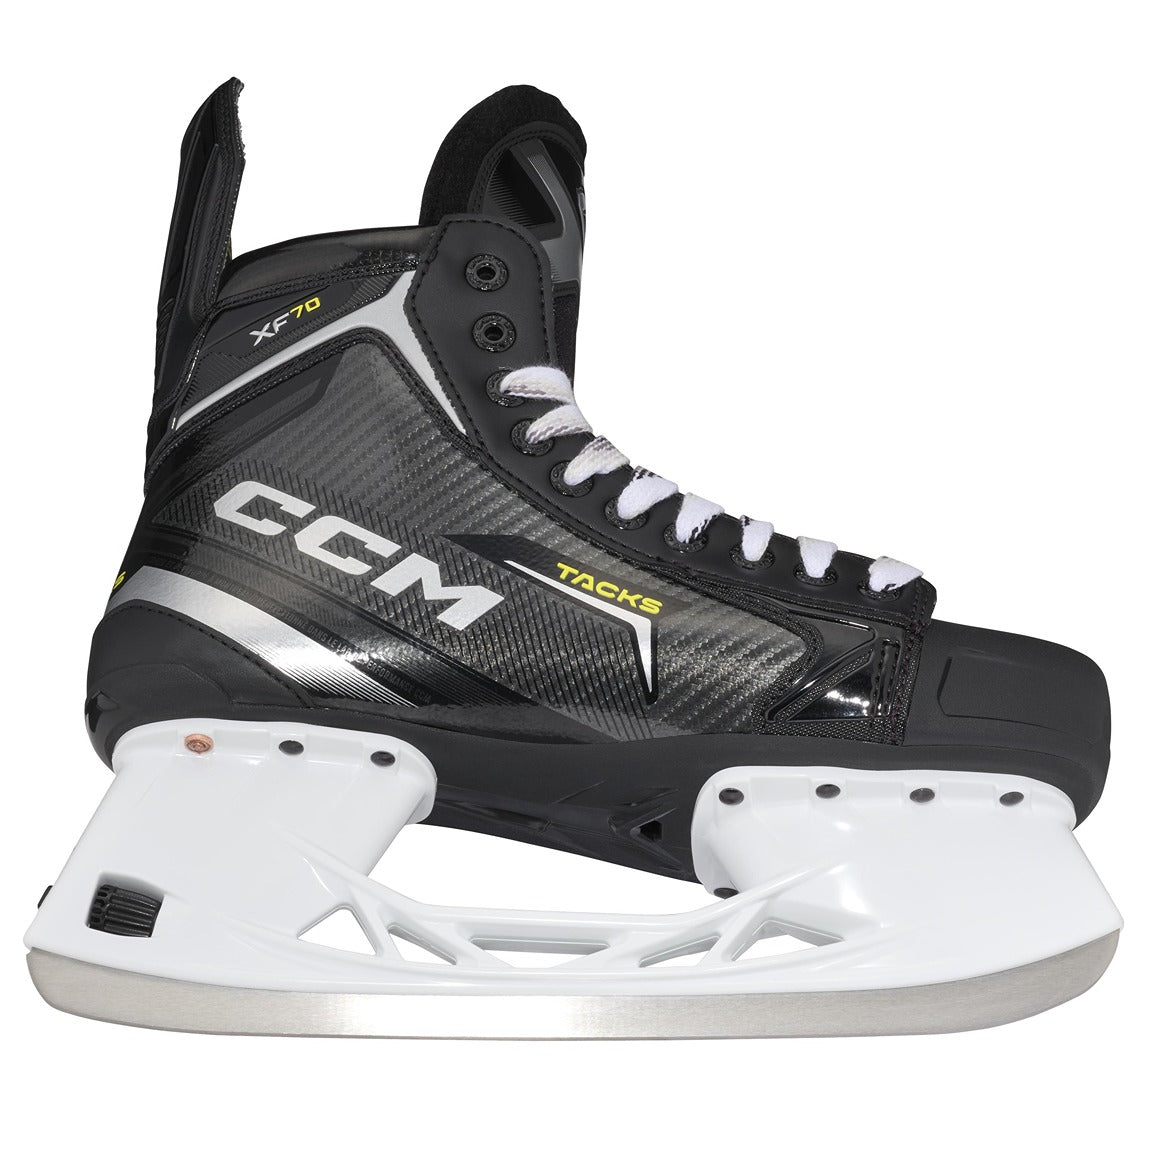 CCM Tacks XF70 Hockey Skates - Intermediate